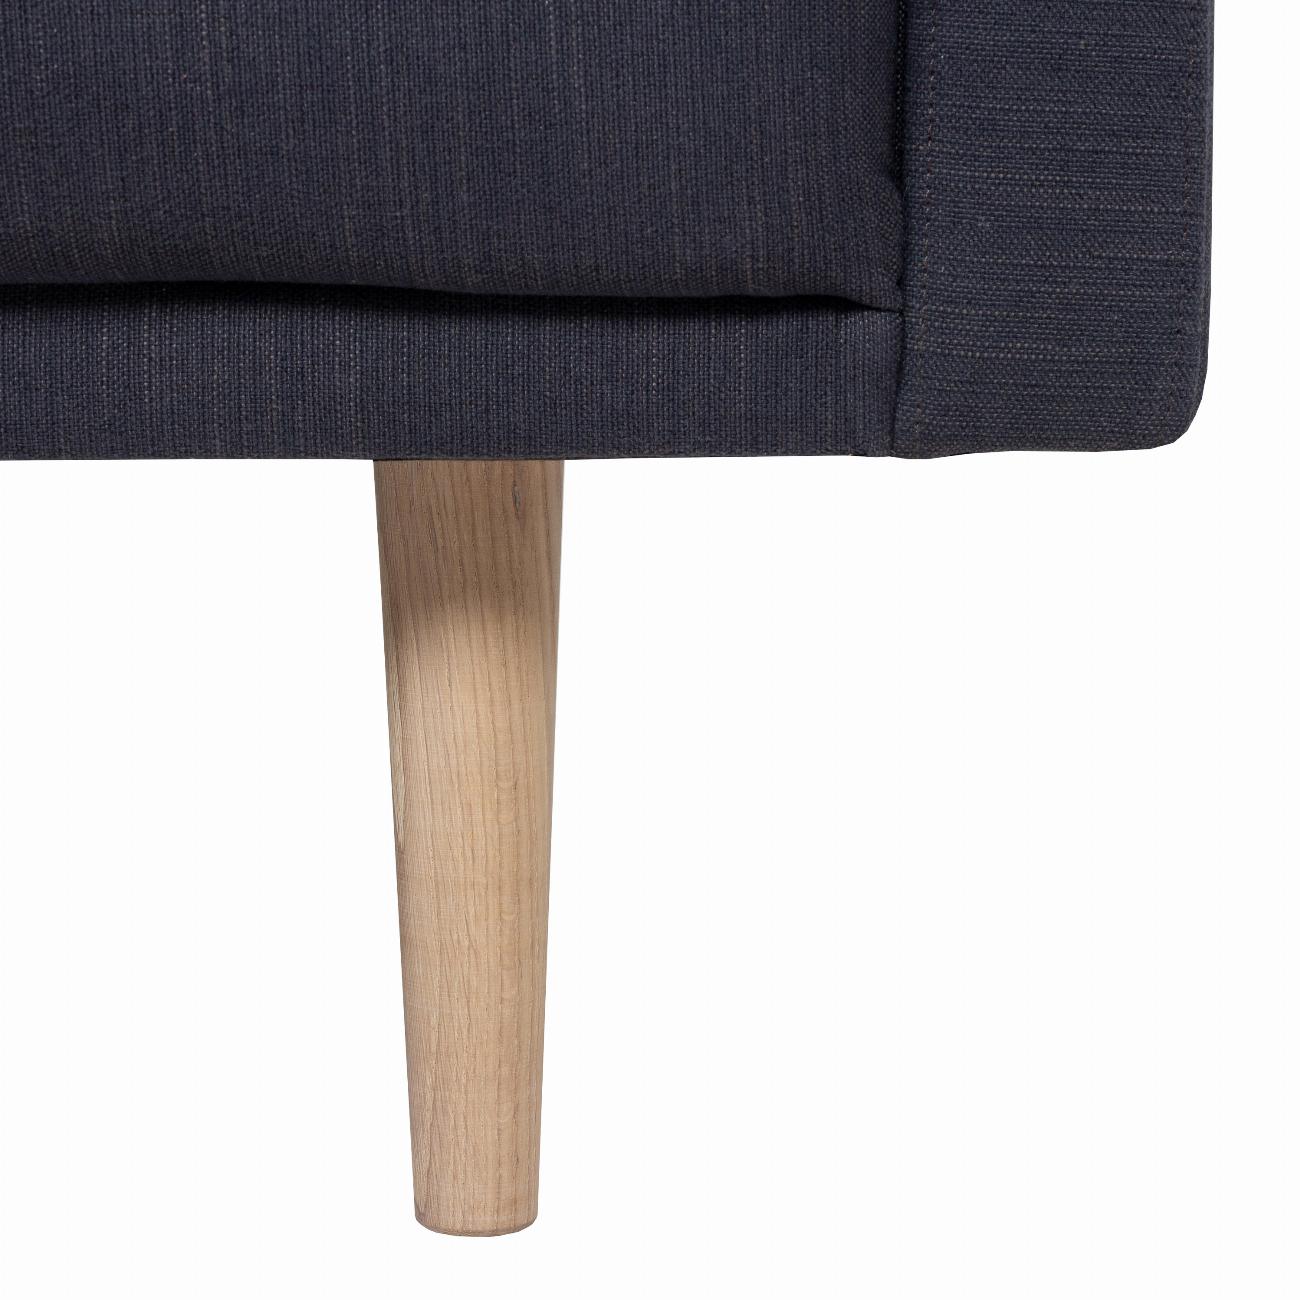 Larvik Chaiselongue Sofa  (LH) -  Antracit, Oak Legs